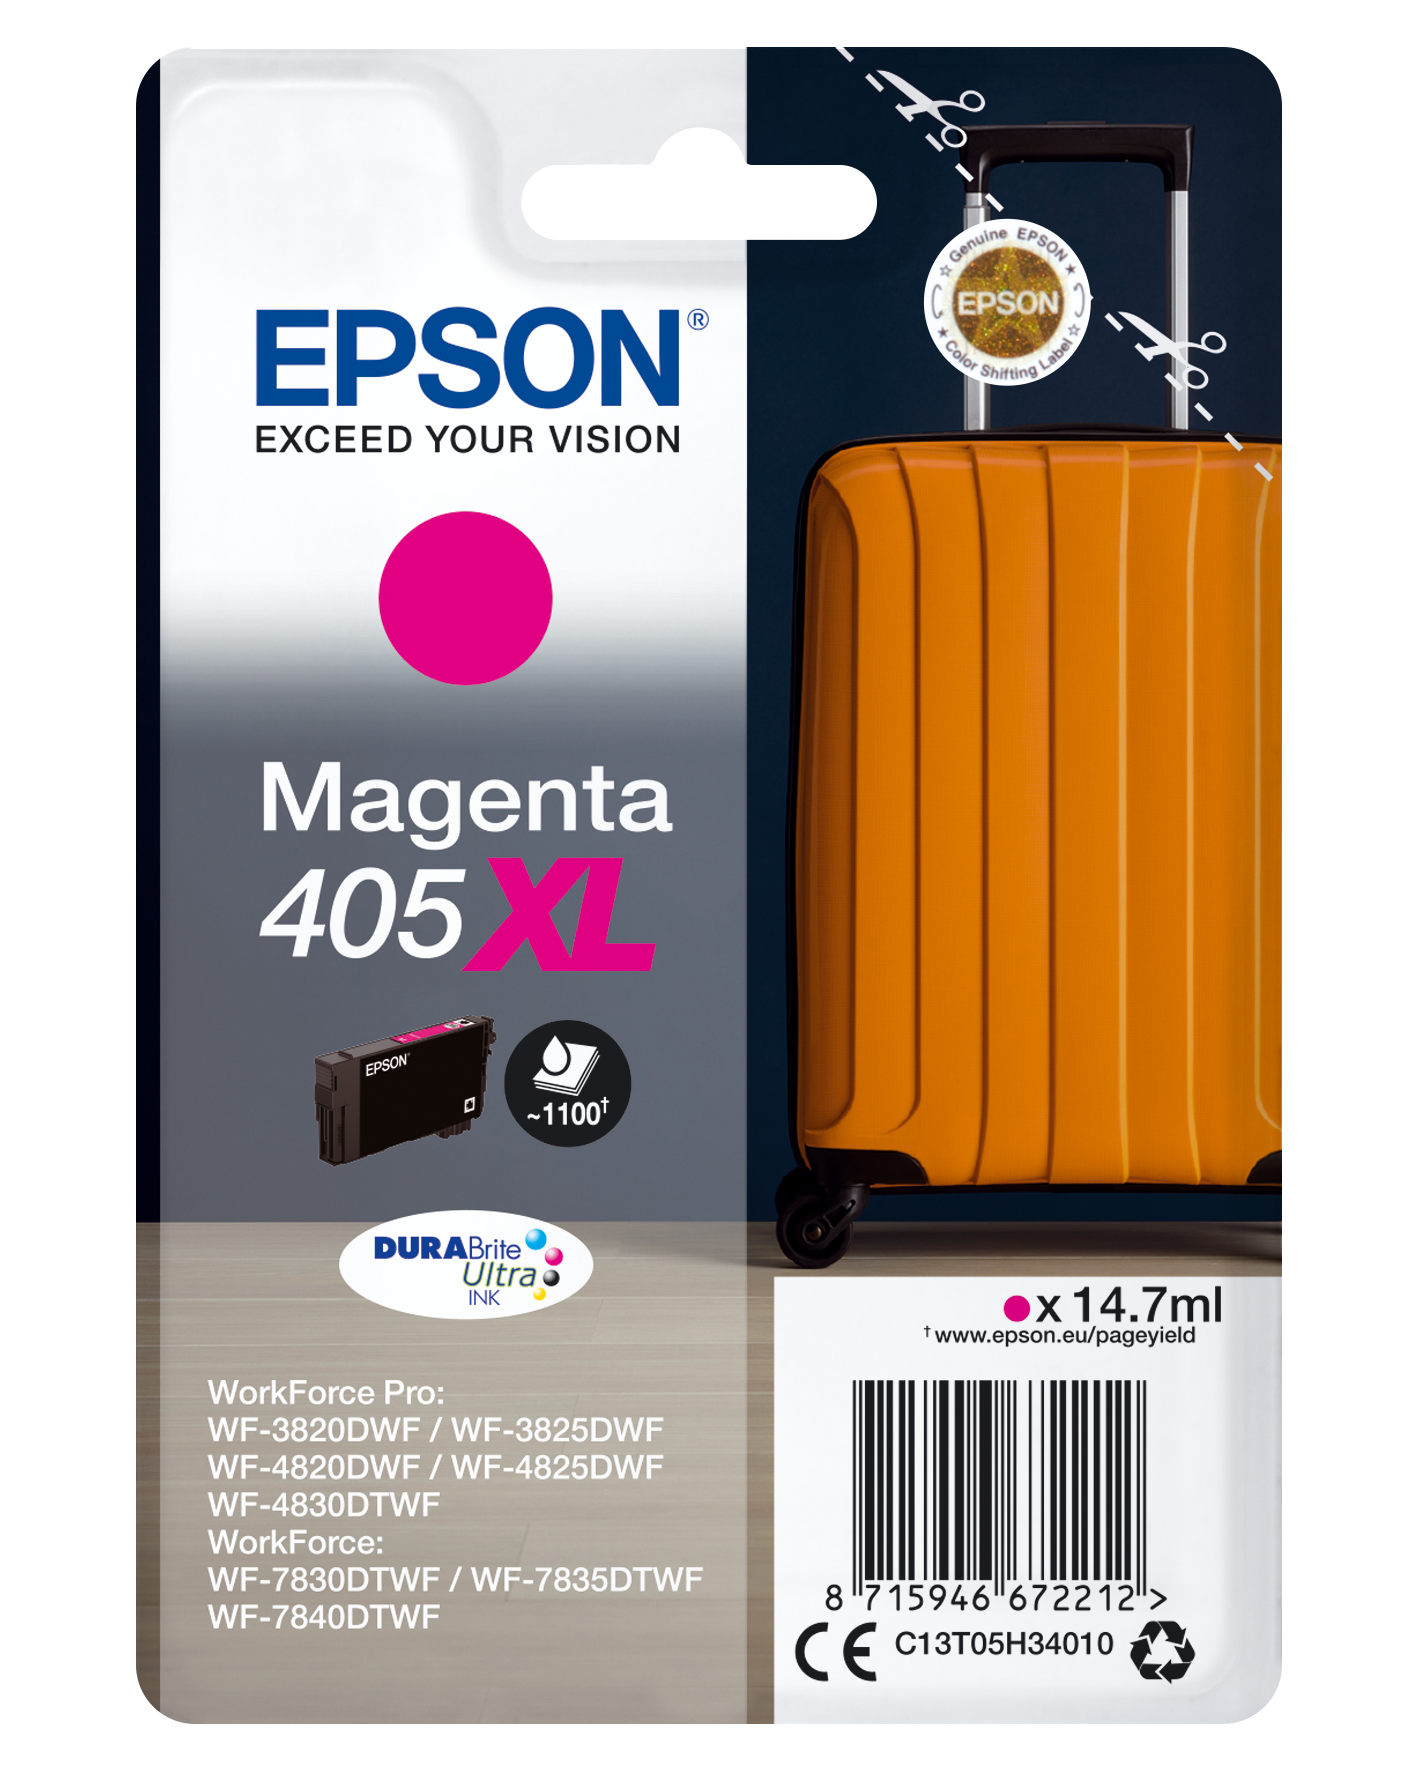 Epson Singlepack Magenta 405XL DURABrite Ultra Ink single pack / magenta